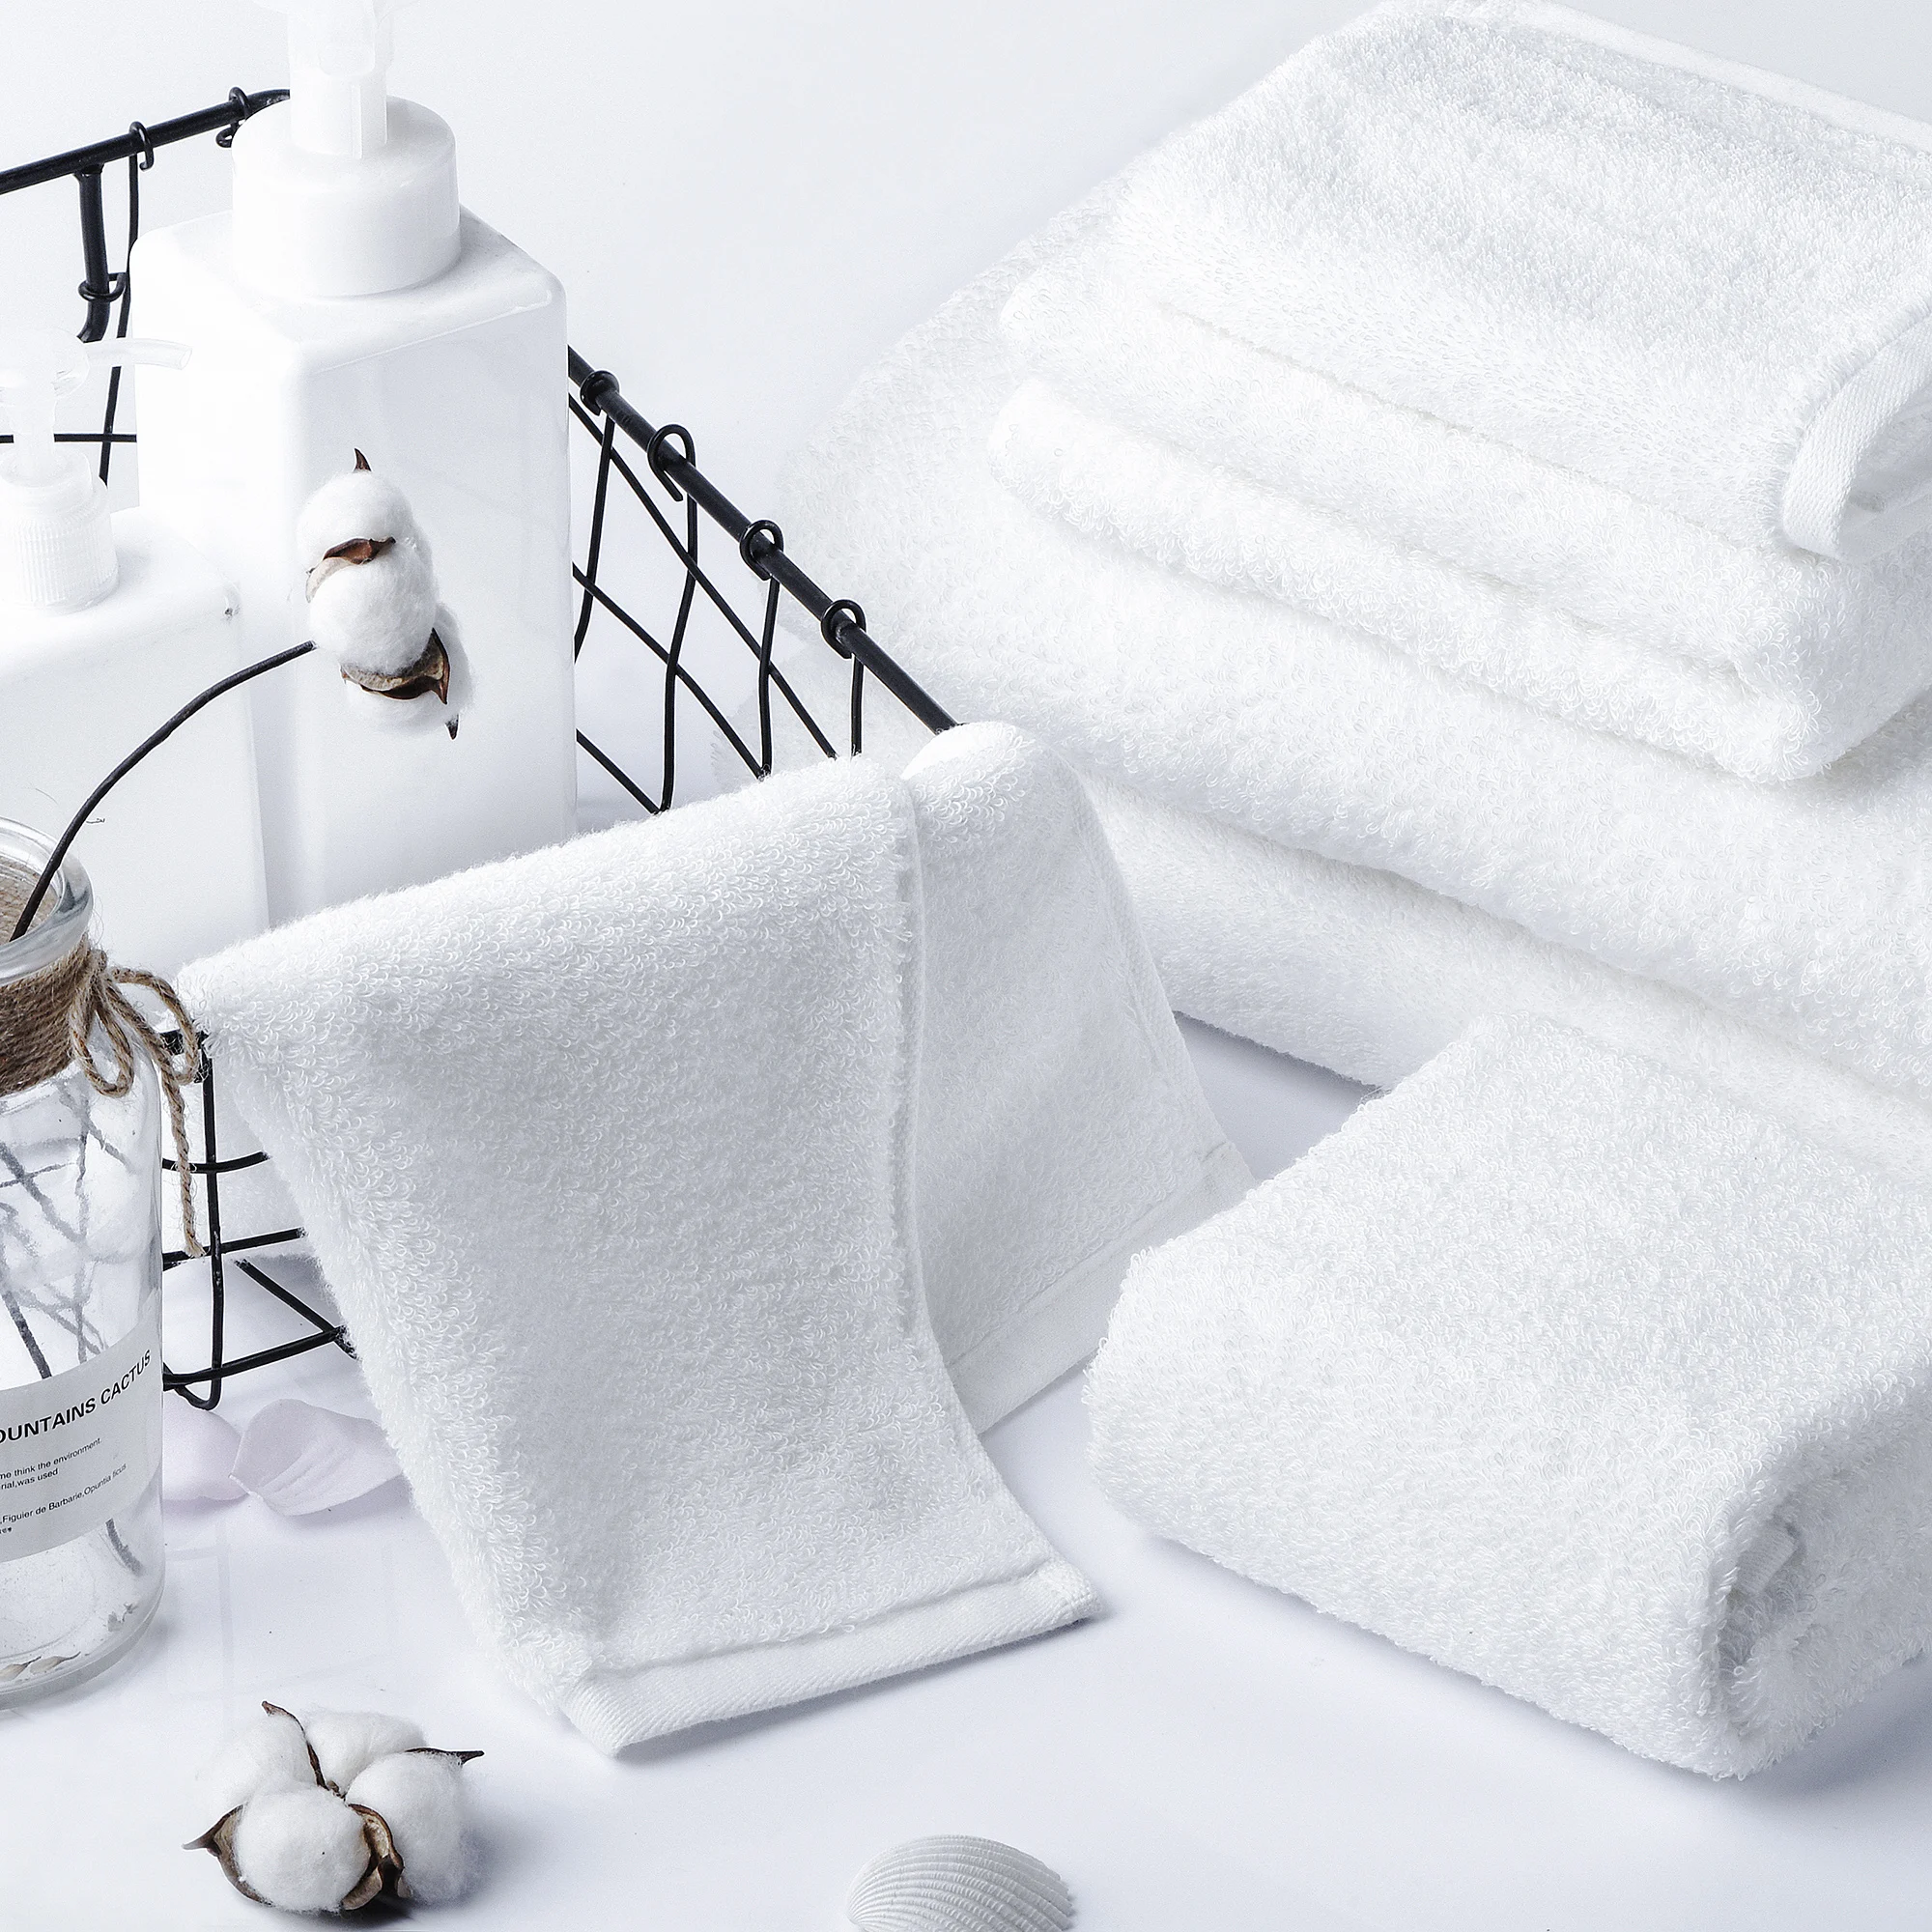 Towels 6 Piece Towels, Premium Soft Absorbent Low lint Bath Towels, Hotel  and spa Quality, 2 Bath Towels, 2 Hand Towels, 2 wash Cloths, Charcoal Grey  Bath Towel Set.